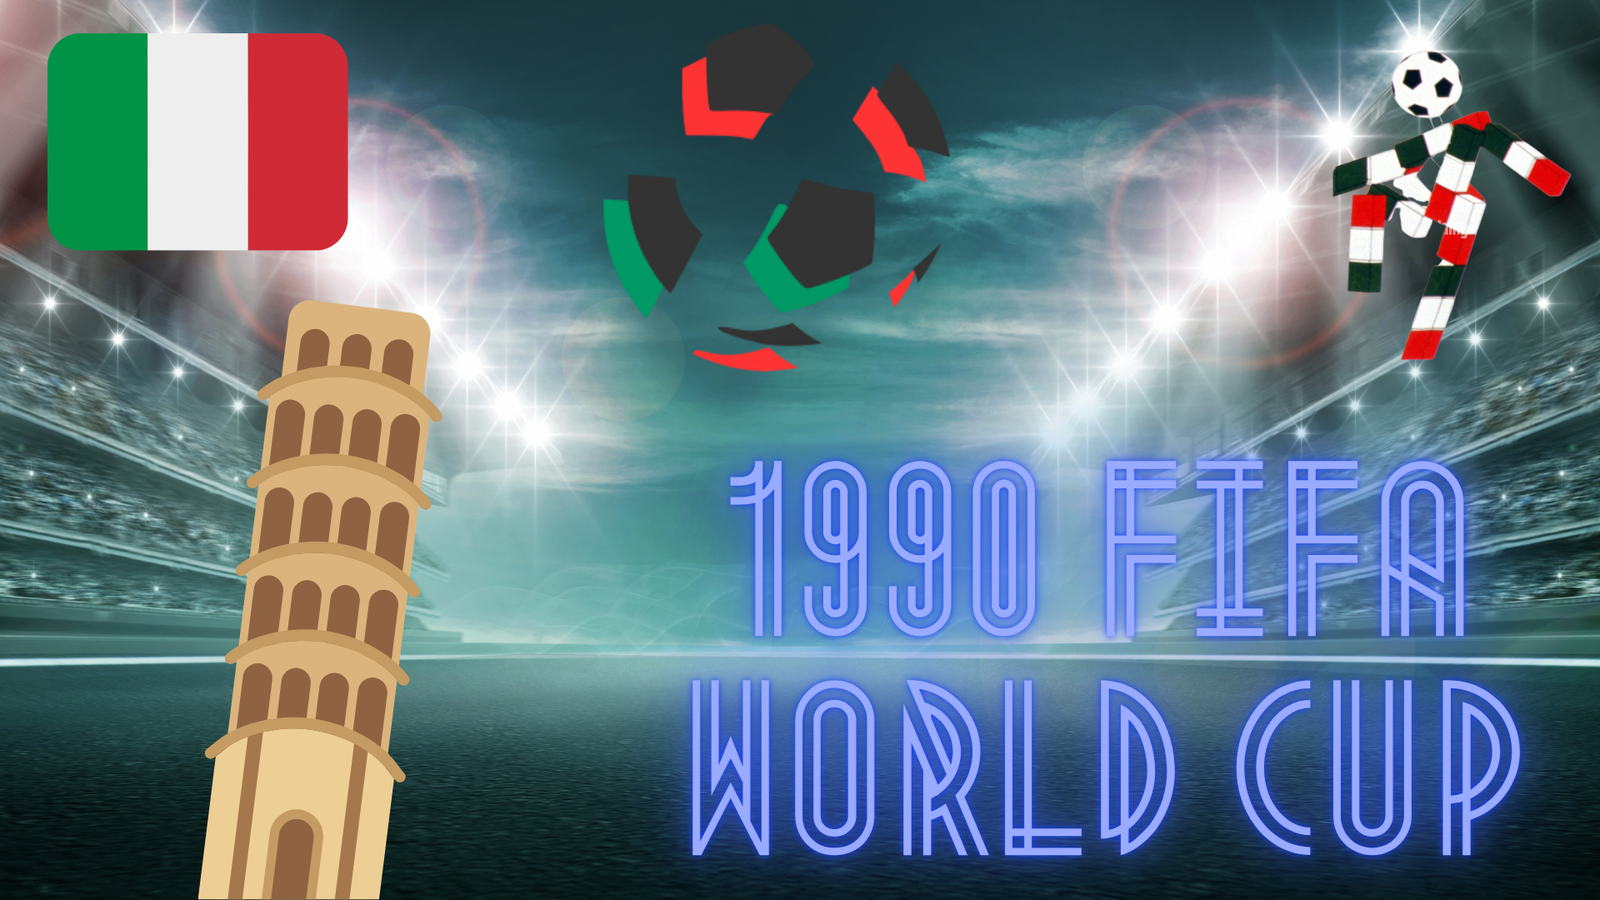 FIFA World Cup 1990